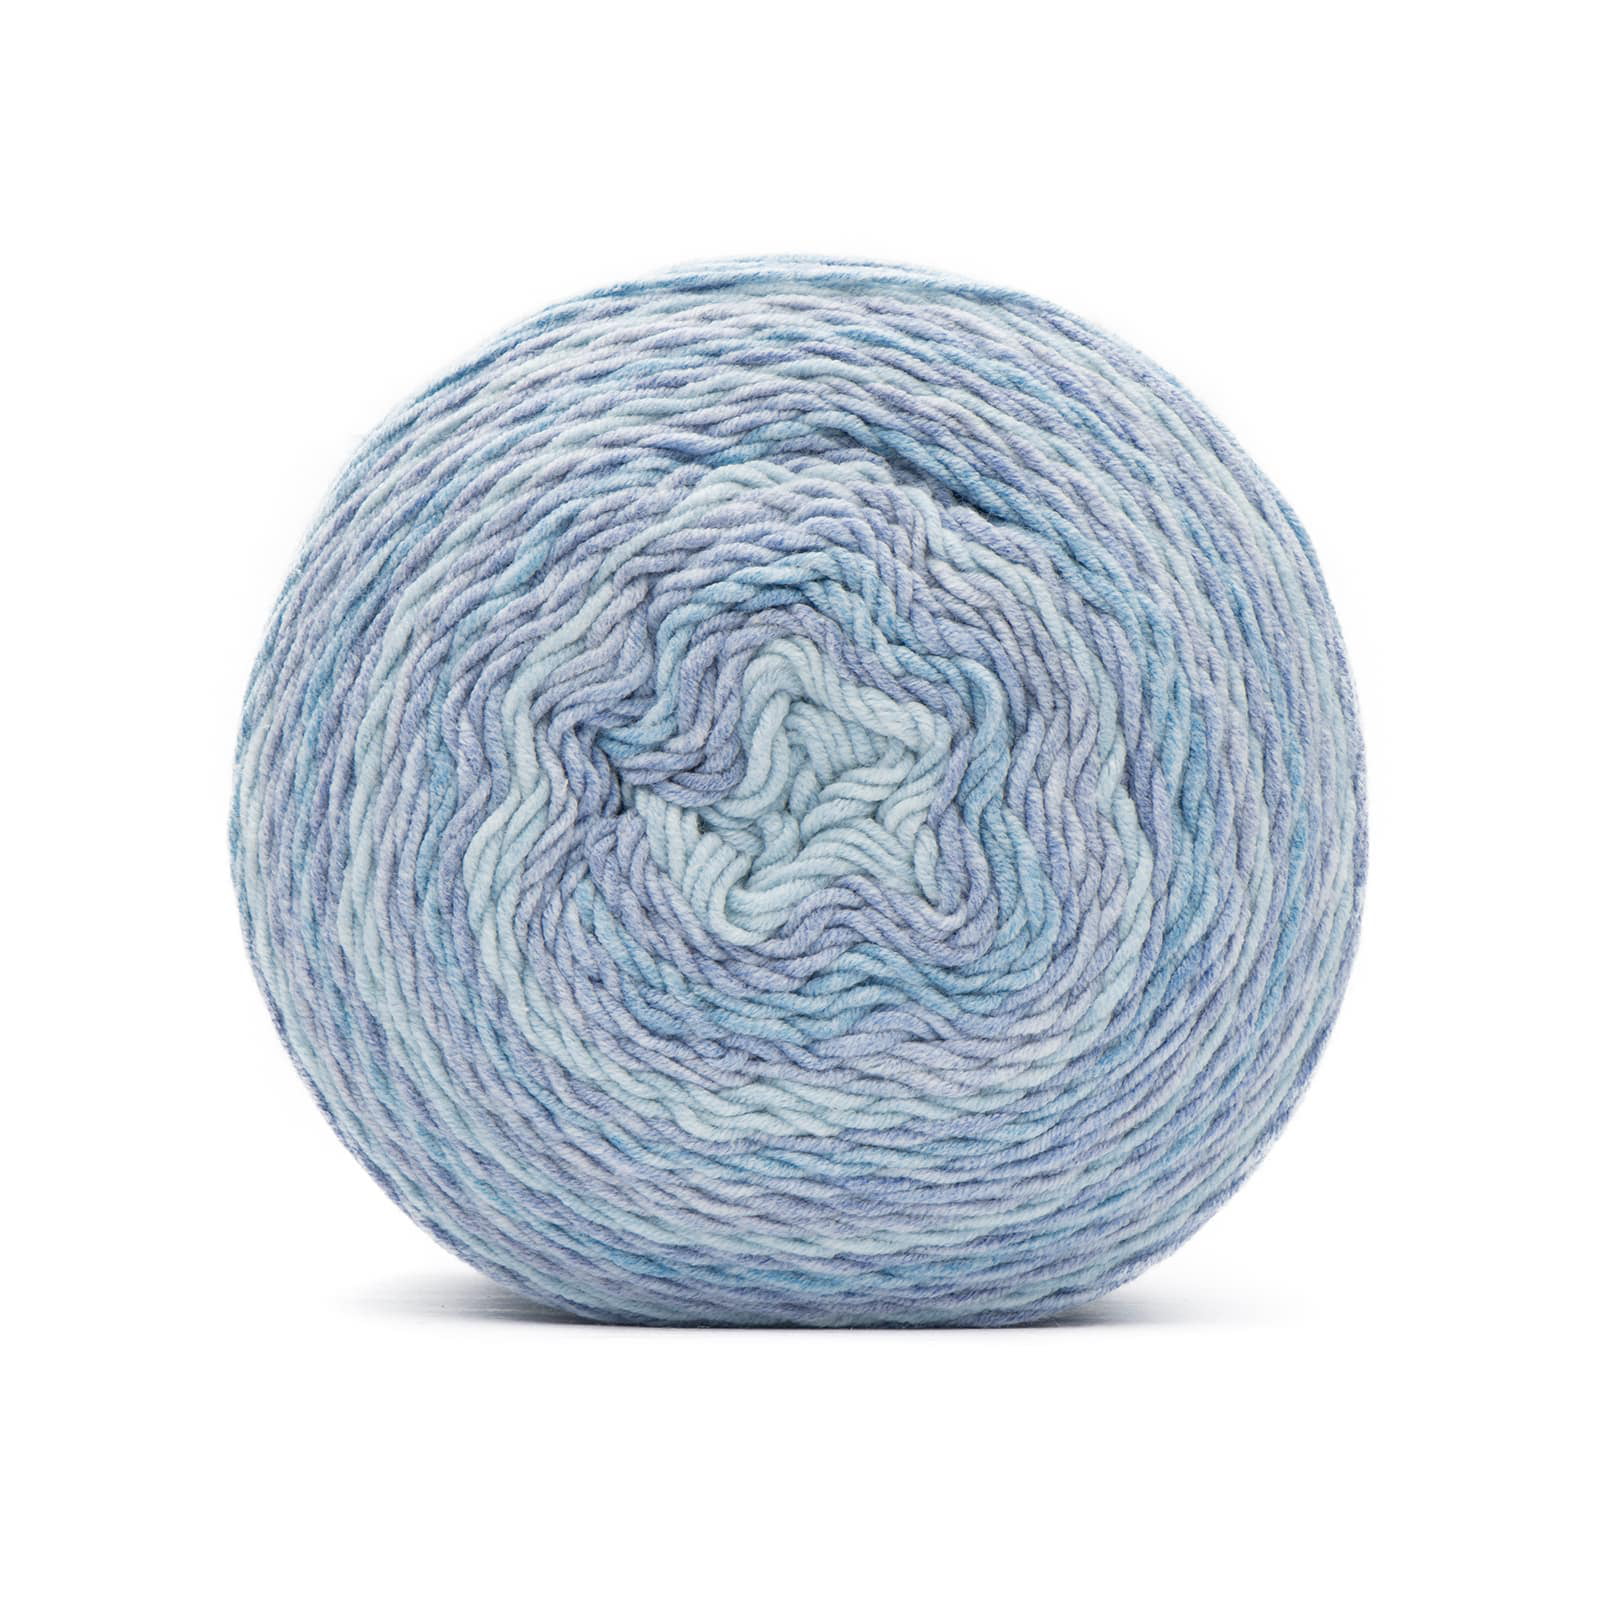 Caron Cotton Cakes Self Striping Yarn 530 yd/485 m 8.8 oz/250 g